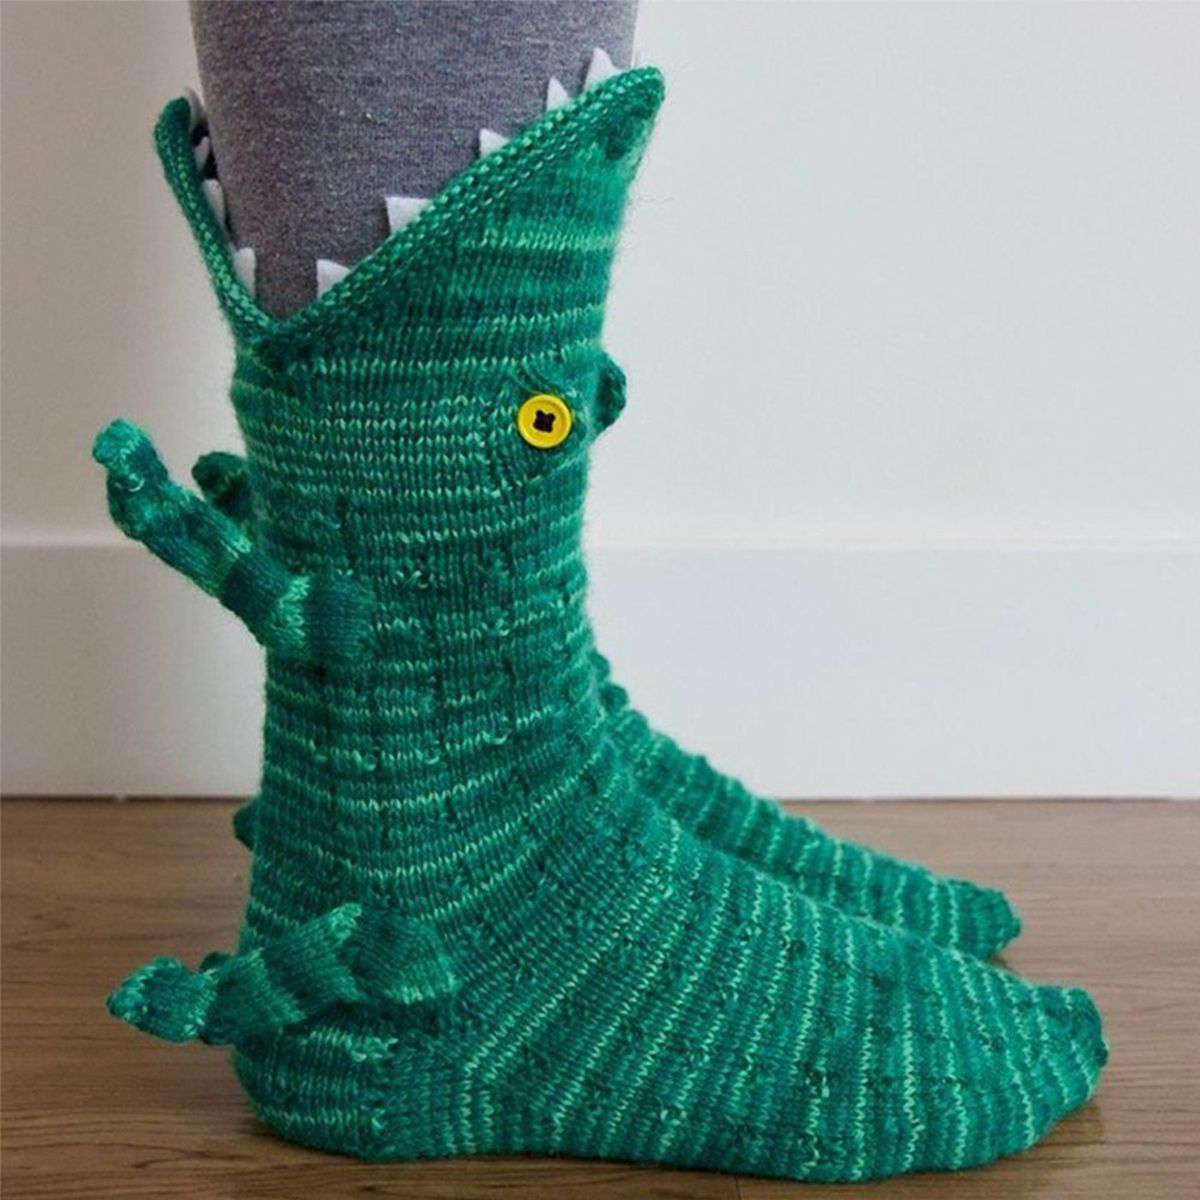 Creative and fun knitted animal socks